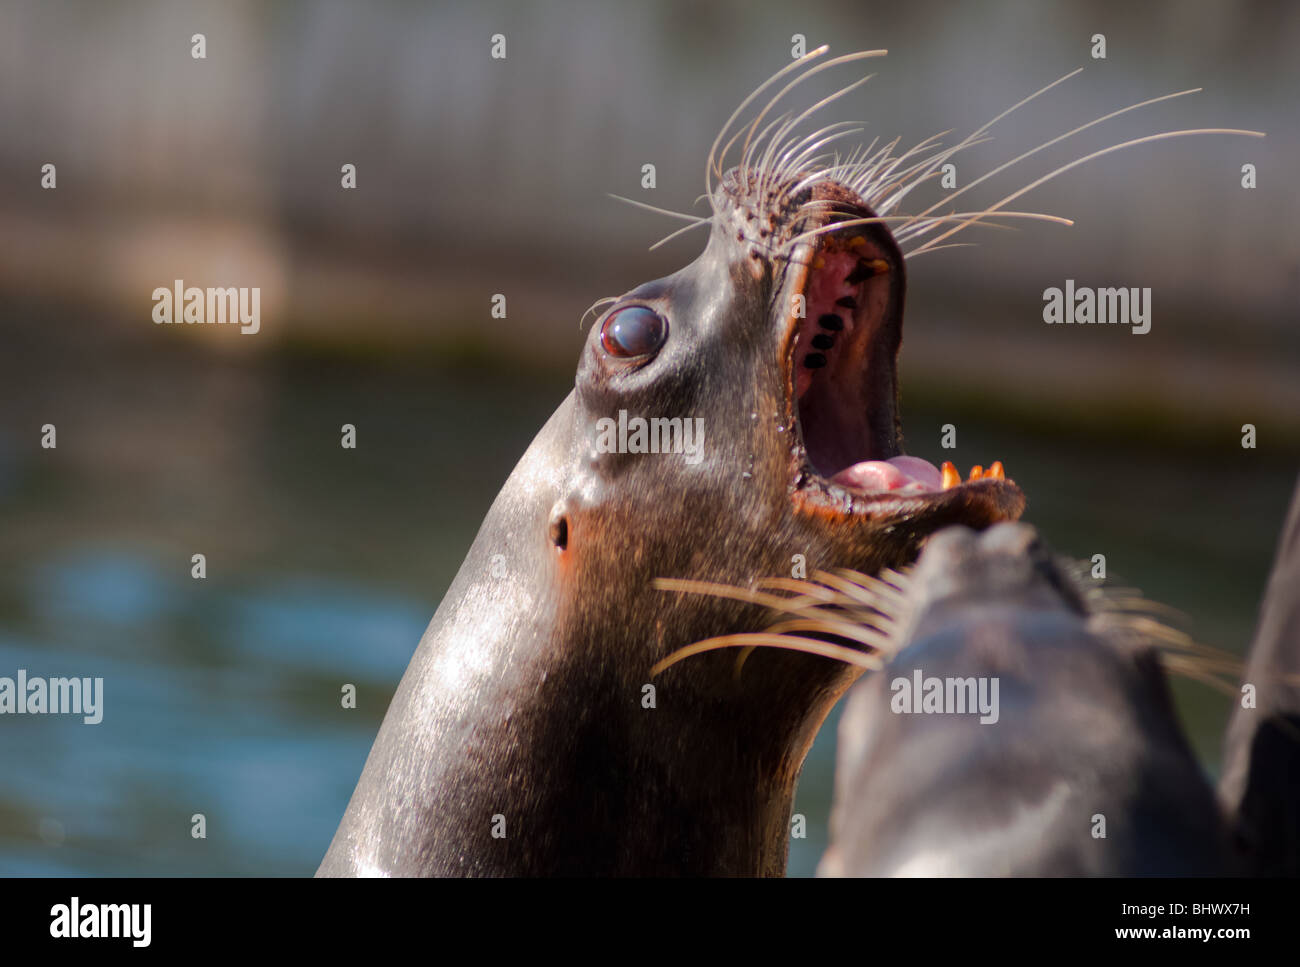 Sea lion barking aggressively Stock Photo